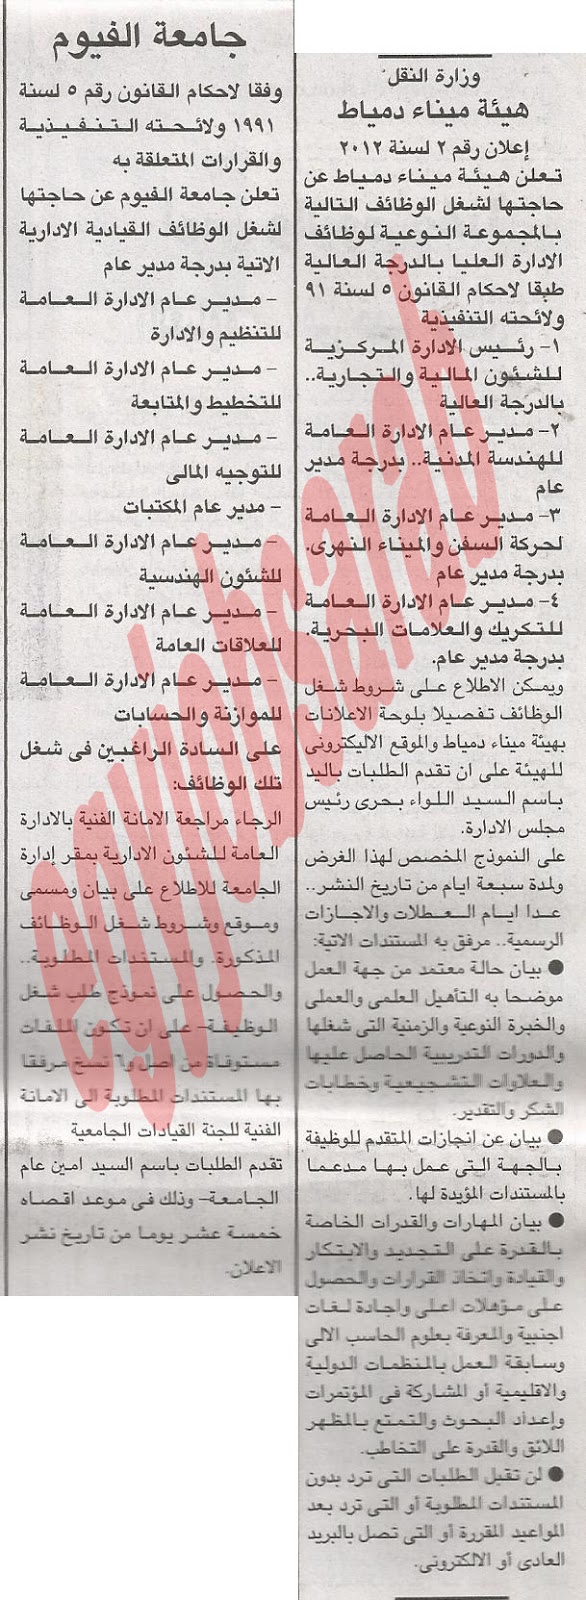 وظائف وفرص عمل جريدة الاخبار الاحد 9 ديسمبر 2012 - وظائف مصر %D8%A7%D9%84%D8%A7%D8%AE%D8%A8%D8%A7%D8%B1+2